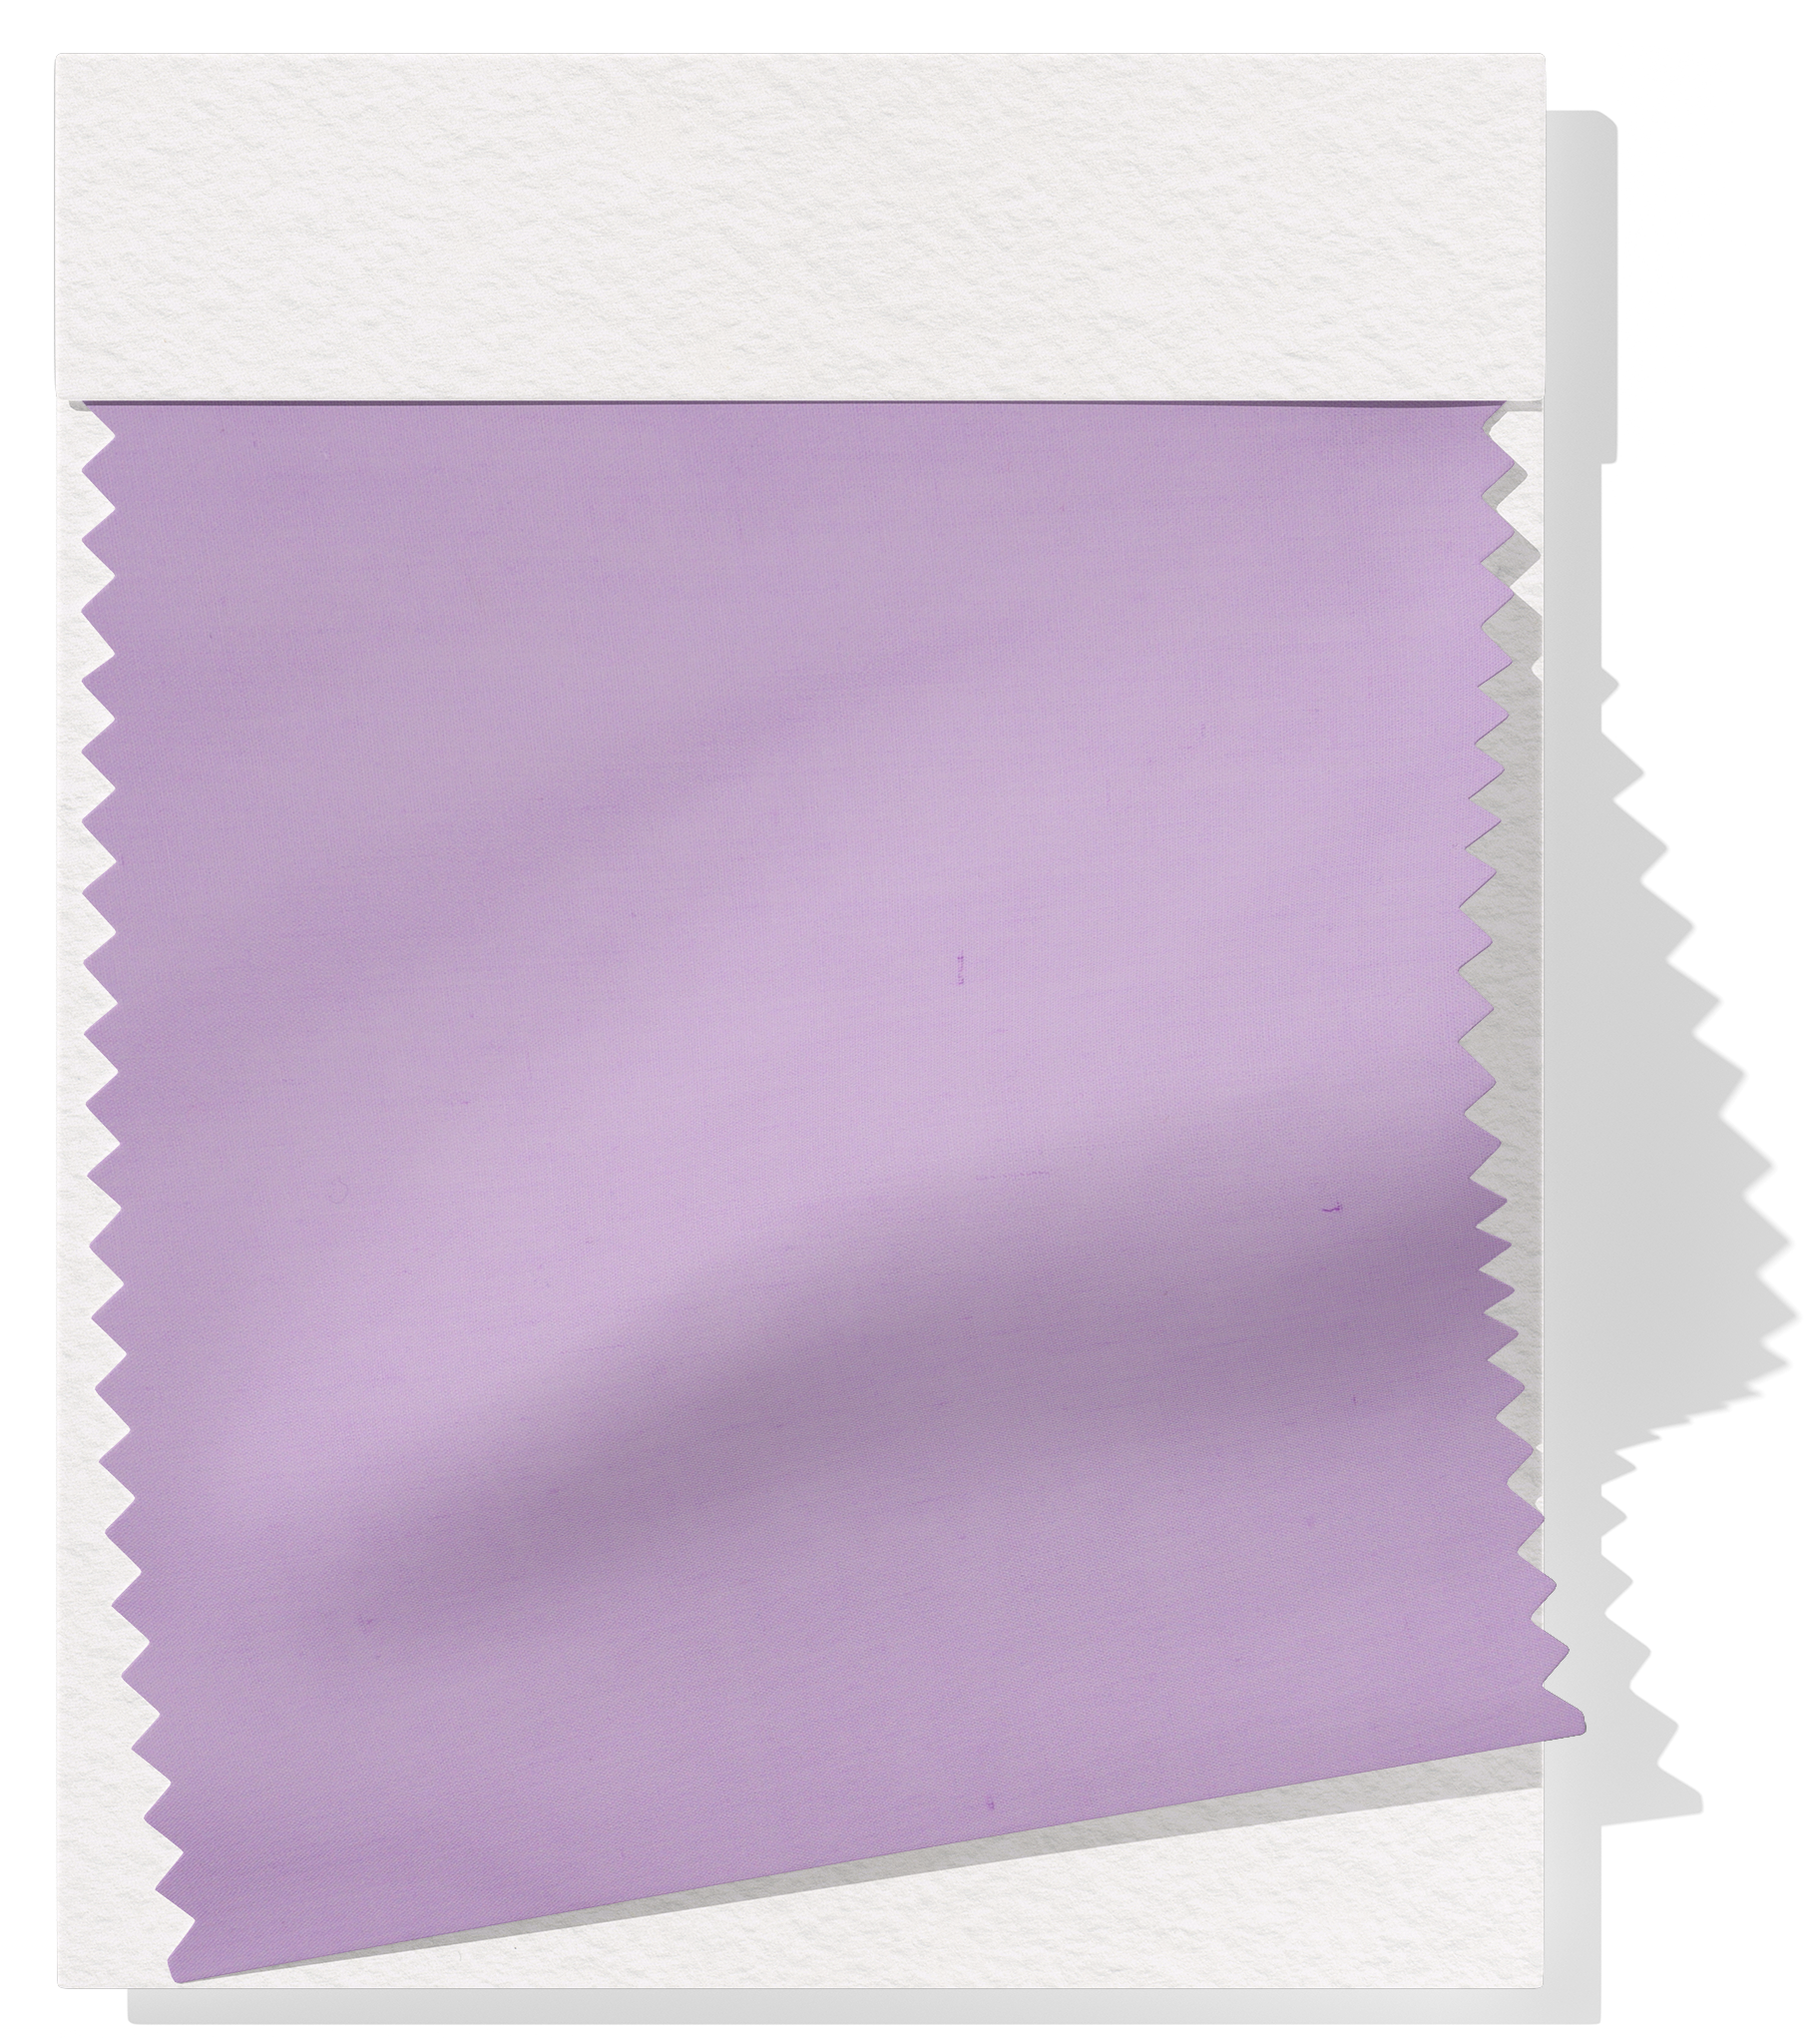 Poplin $4.00p/m - Lilac